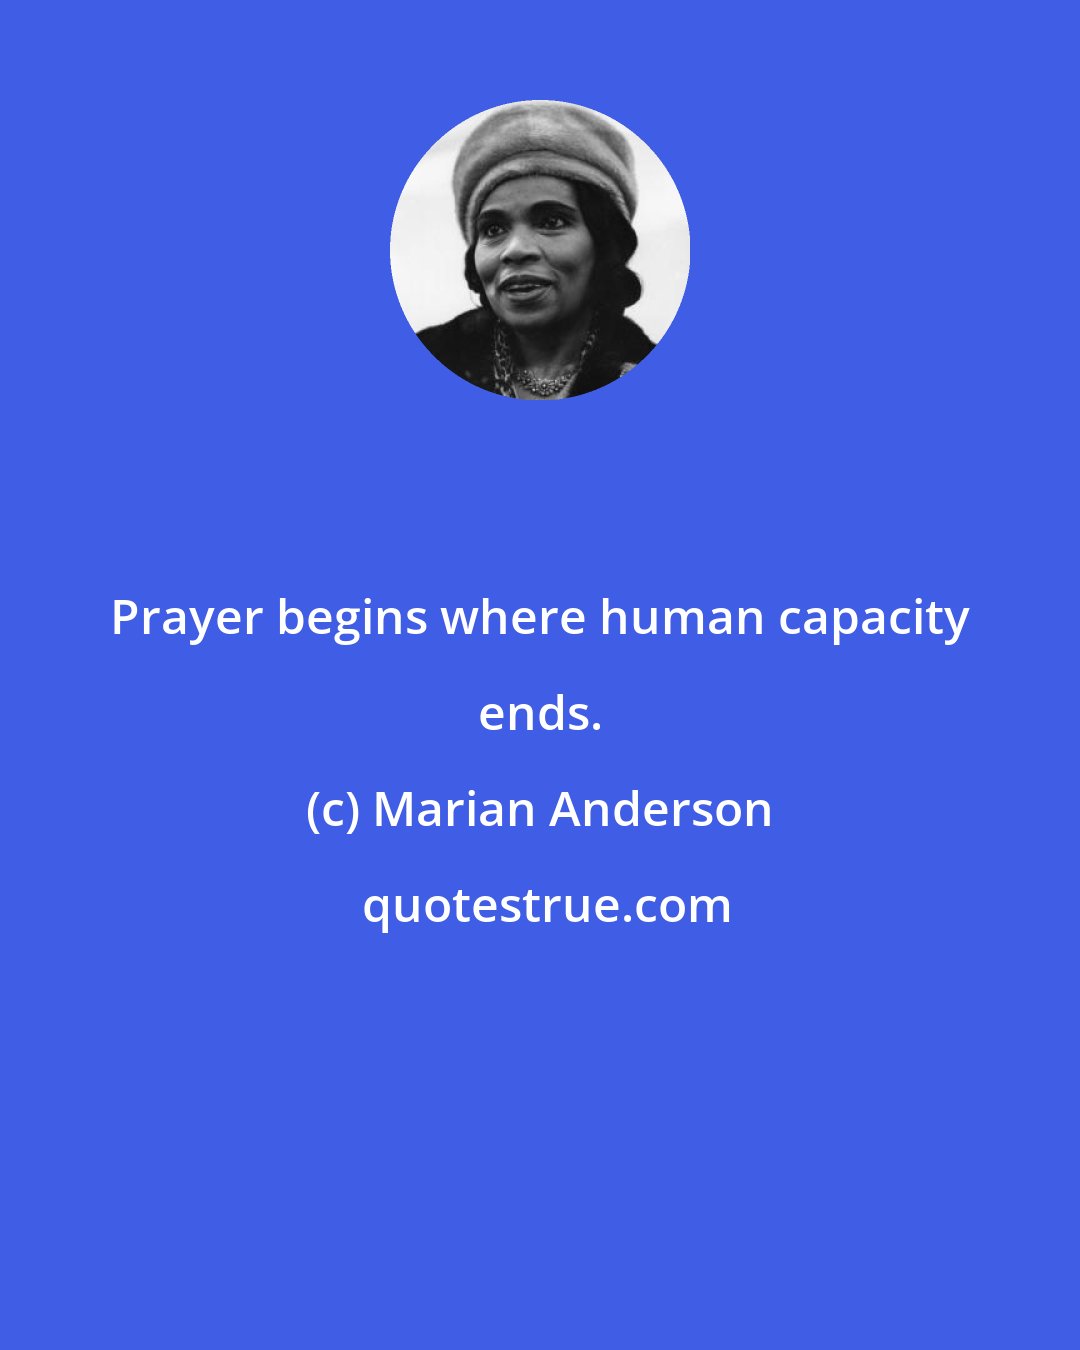 Marian Anderson: Prayer begins where human capacity ends.